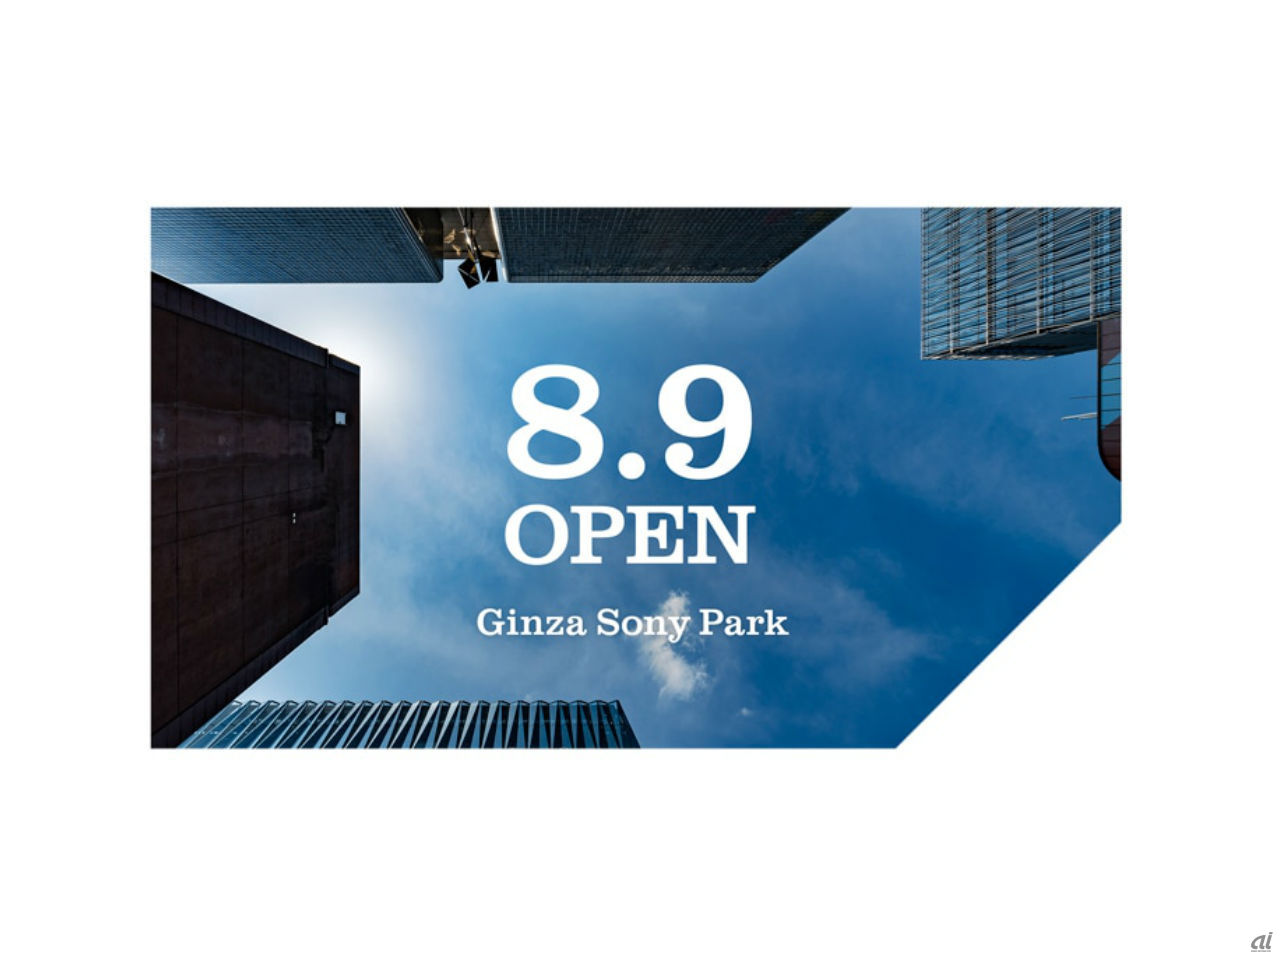 「Ginza Sony Park（銀座ソニーパーク）」が8月9日にオープン